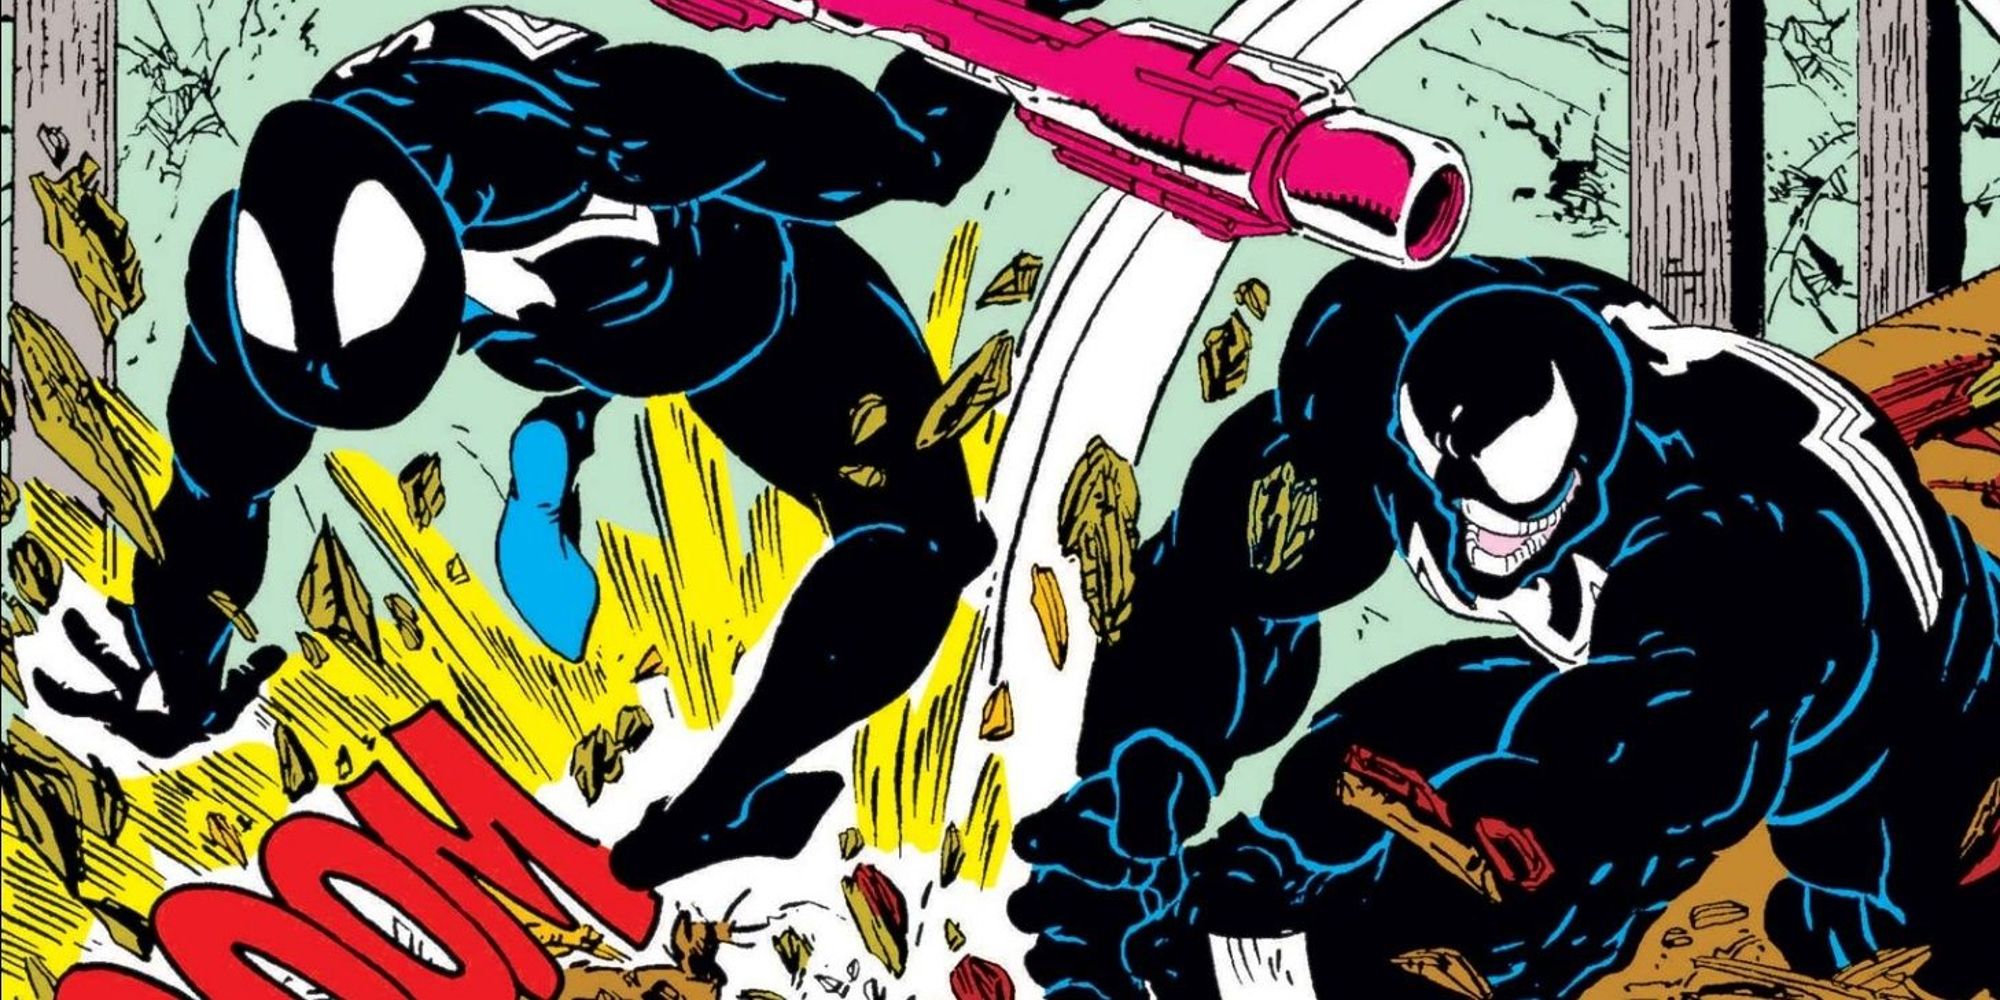 Venom battling the symbiote suit Spider-Man in The Amazing Spider-Man #300